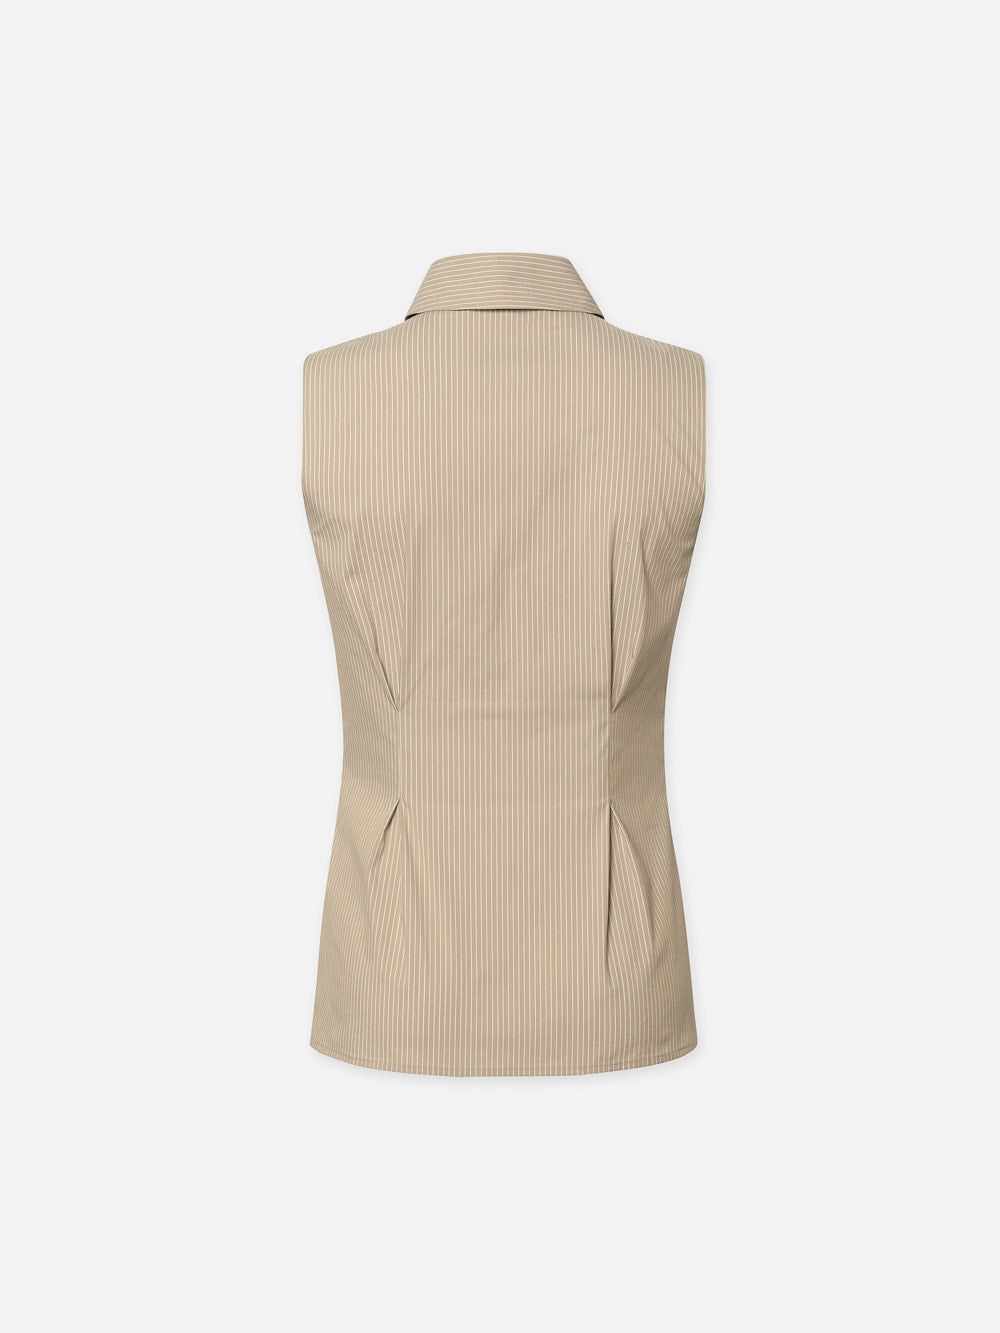 Pleated Sleeveless Shirt in Khaki Multi - 3